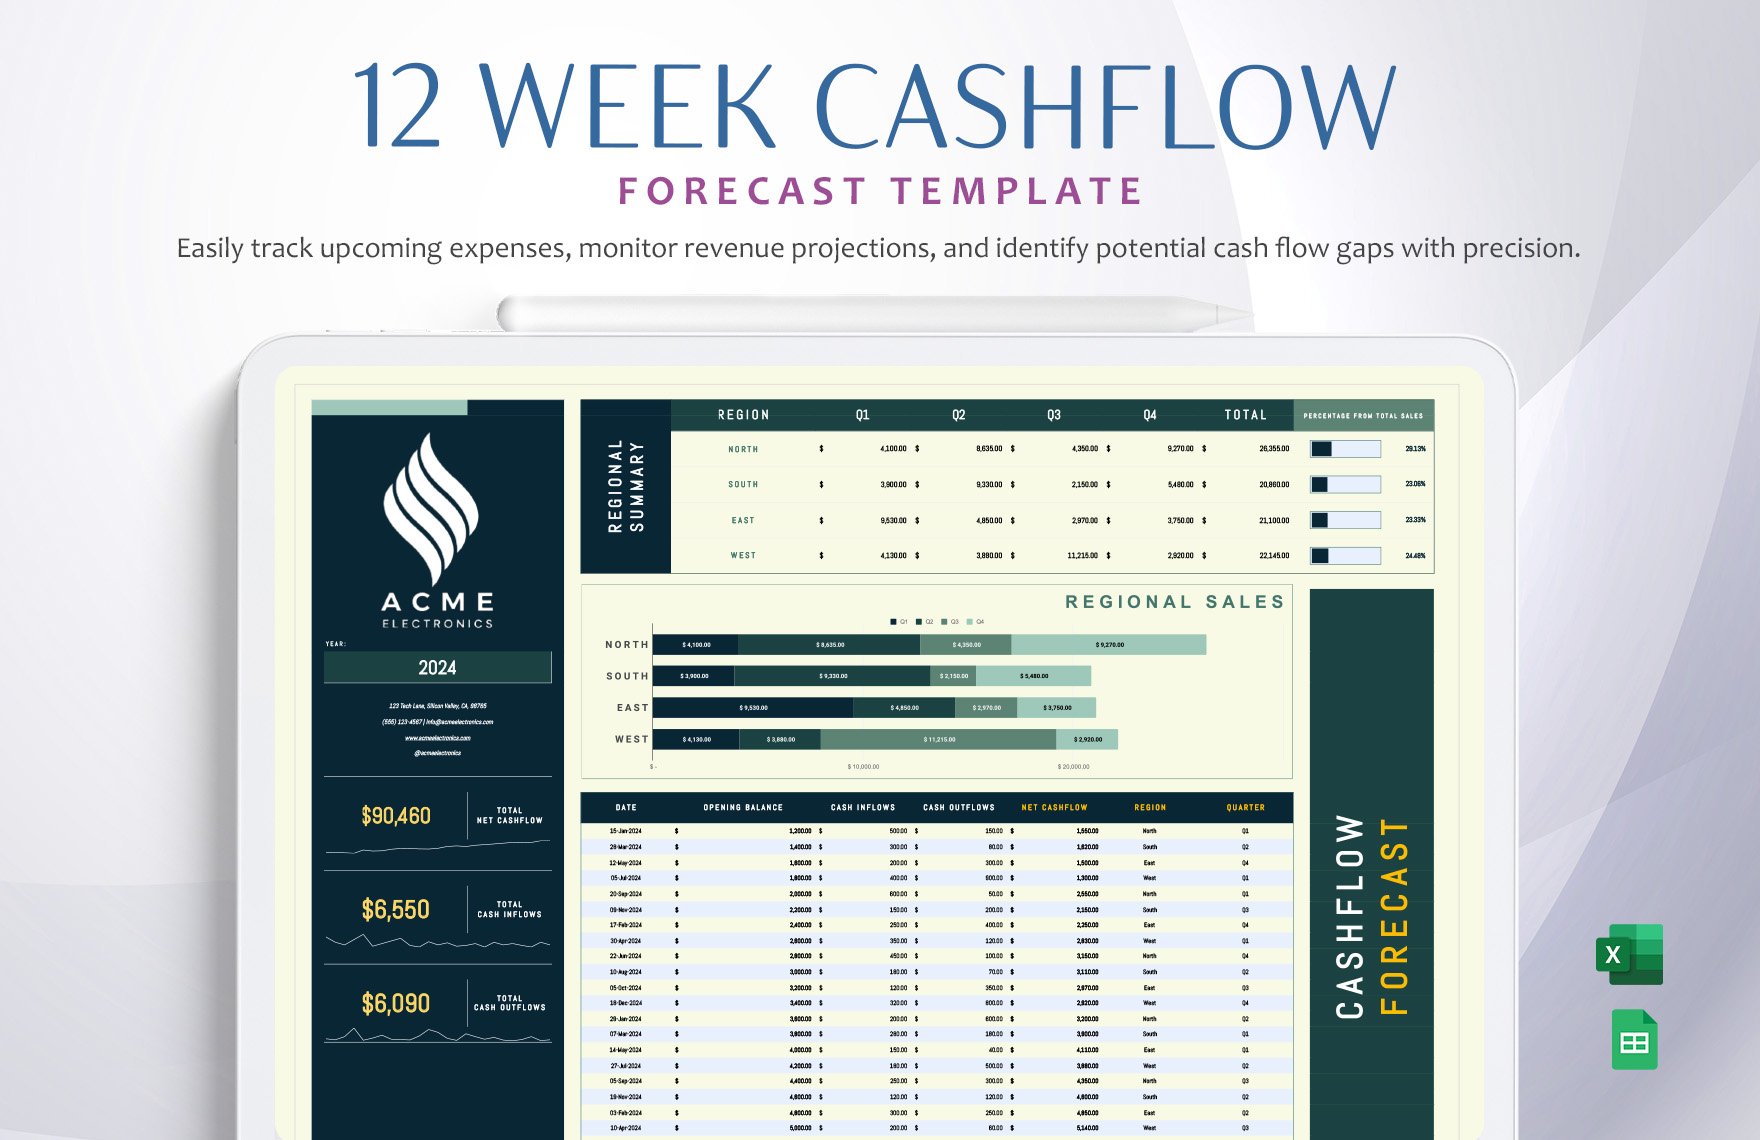 12 Week Cashflow Forecast Template in Excel, Google Sheets